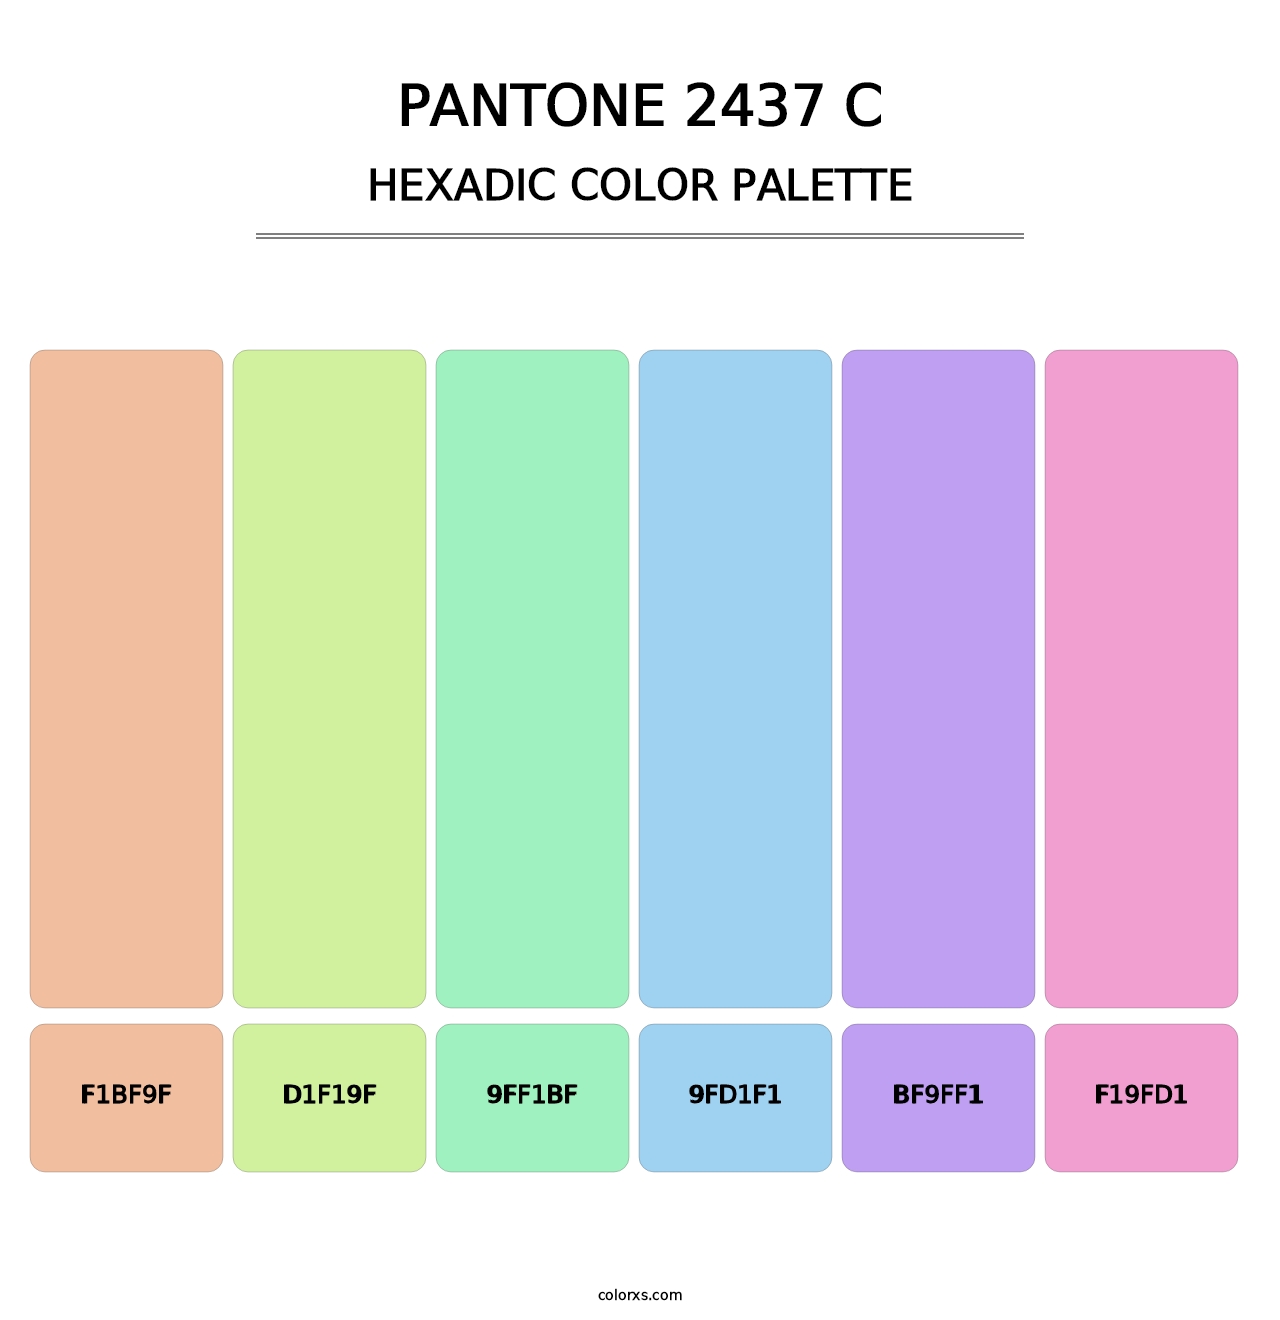 PANTONE 2437 C - Hexadic Color Palette